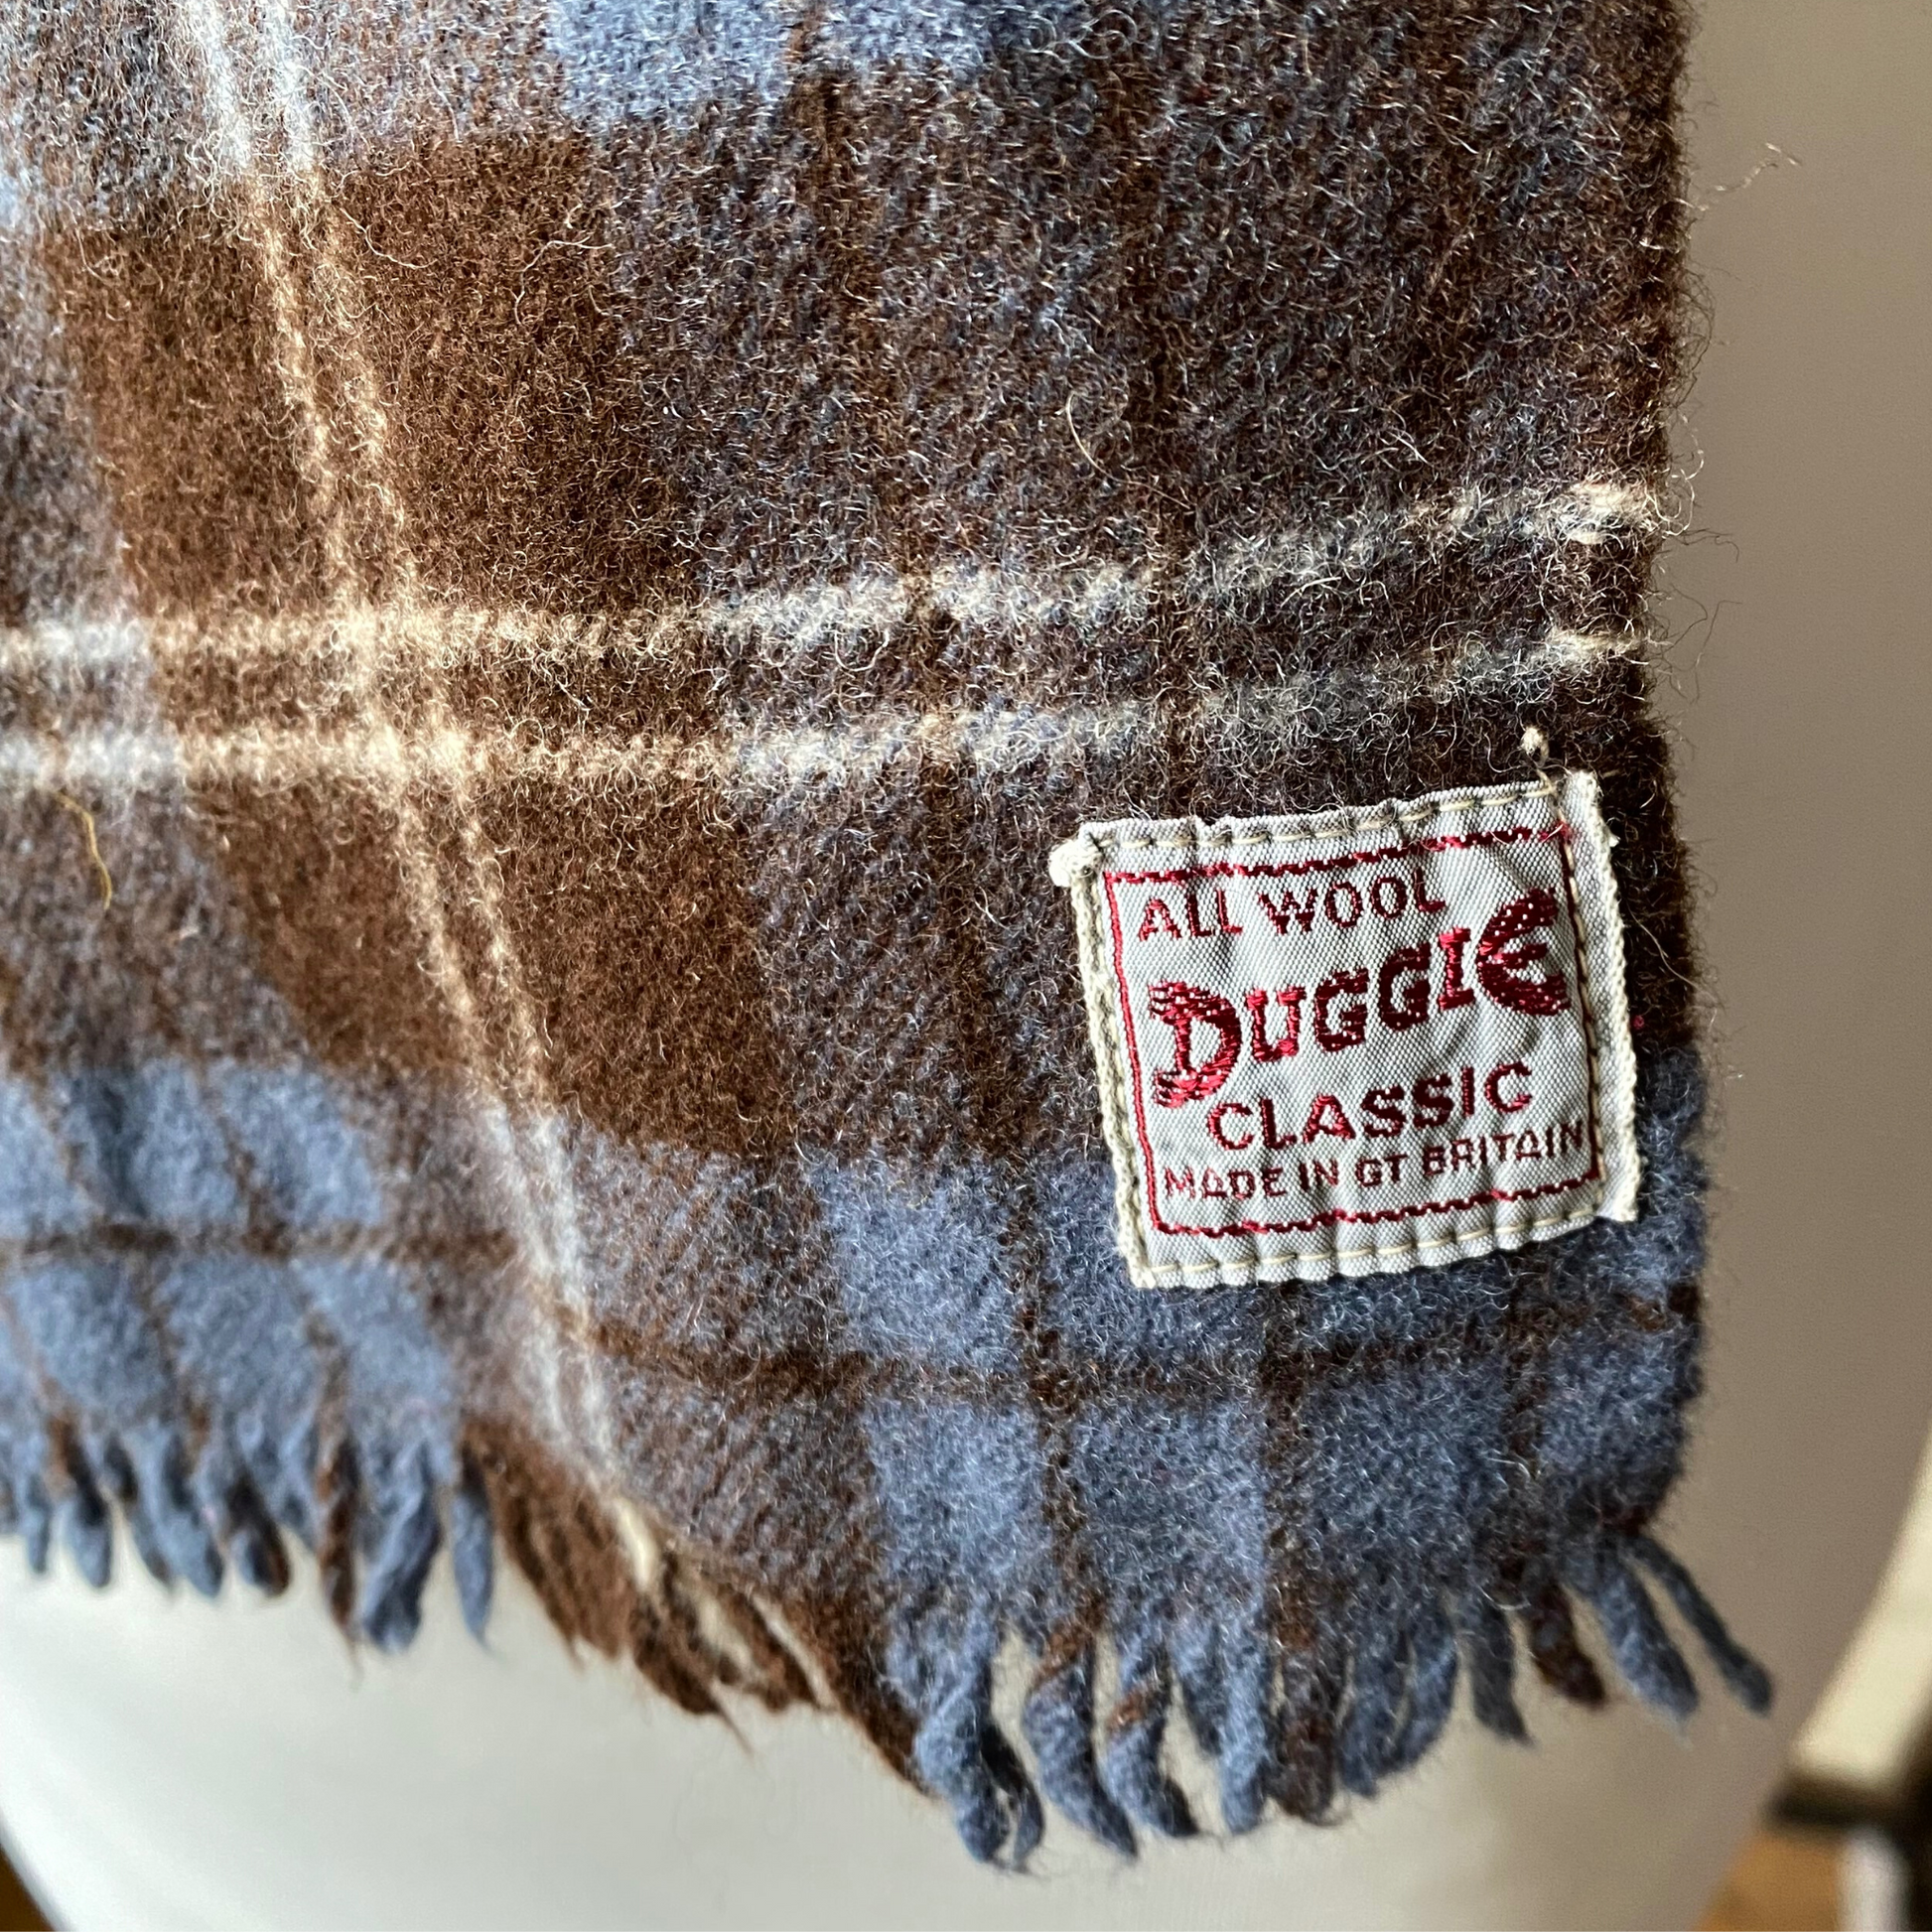 Close up of vintage Duggie scarf label 